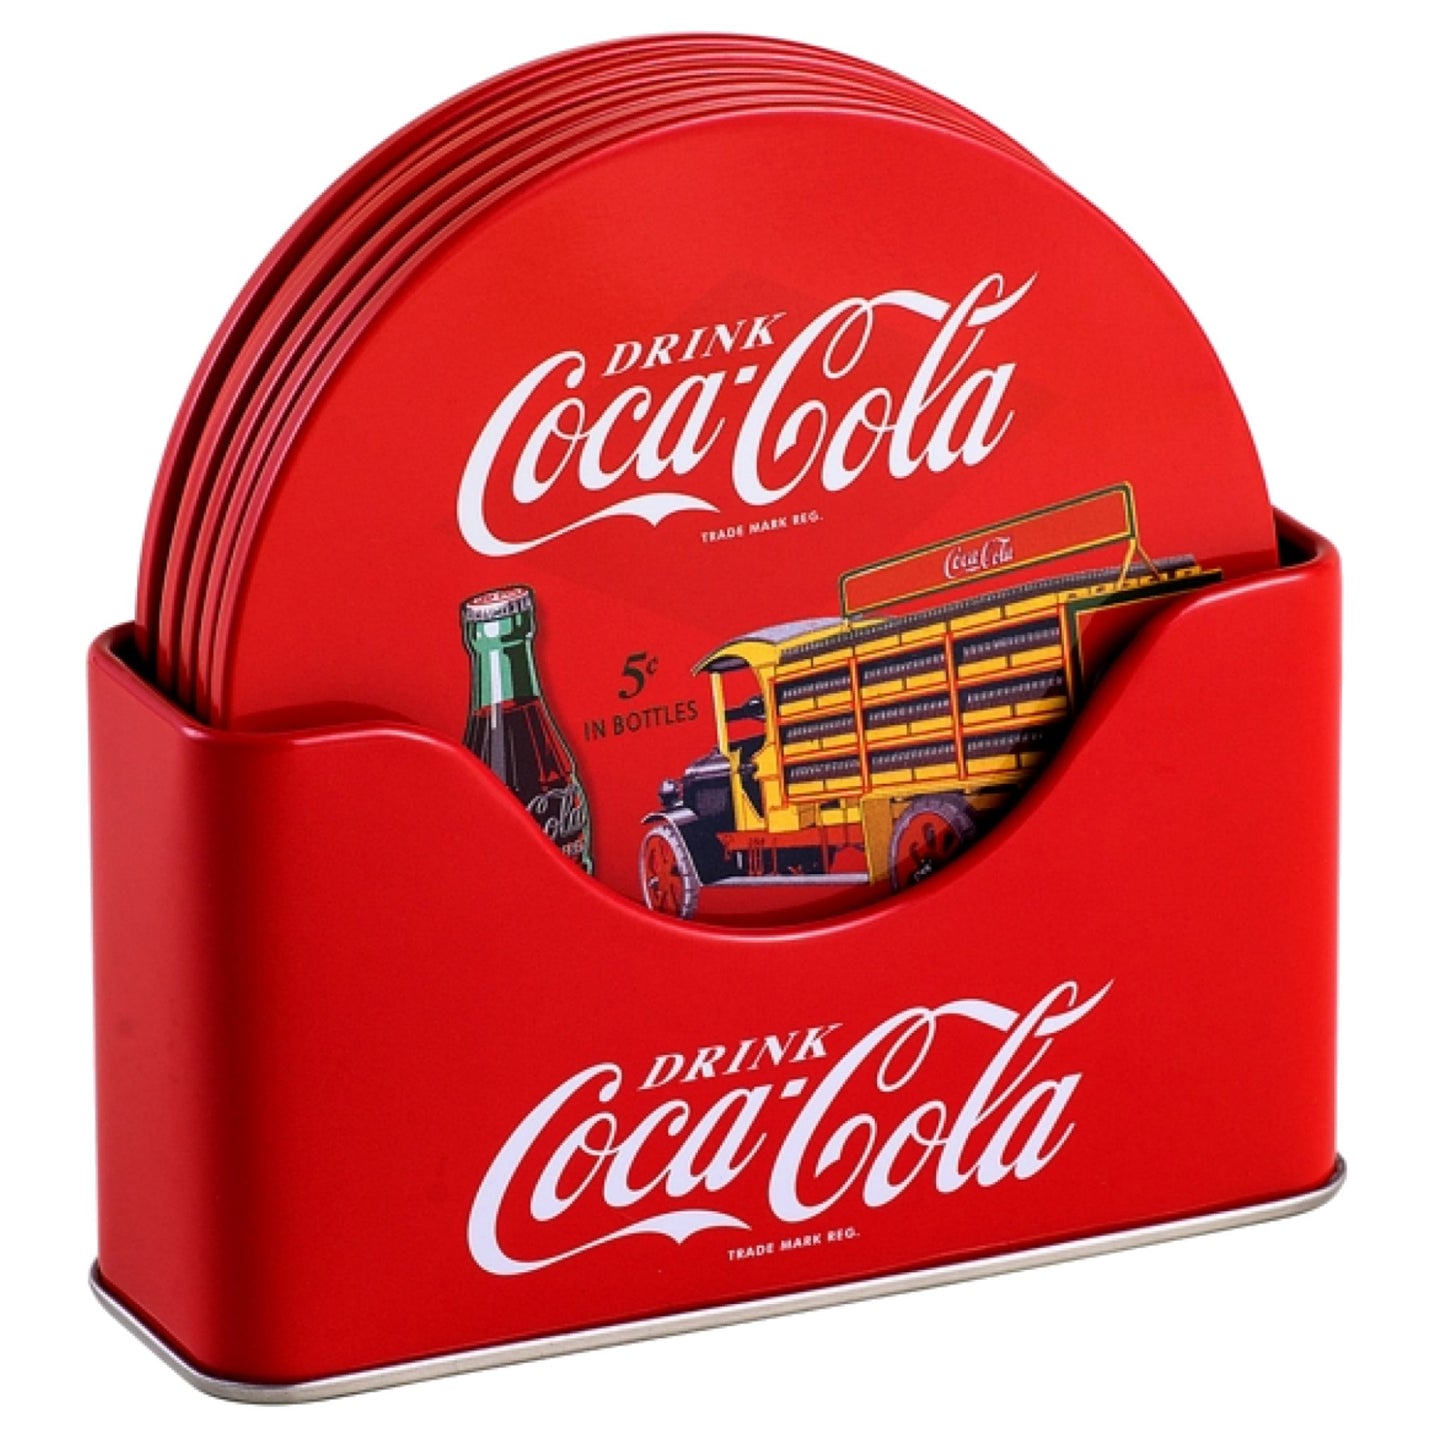 Officially Licensed Coca-Cola Truck Design Coaster 6-Piece Set w/ Holder